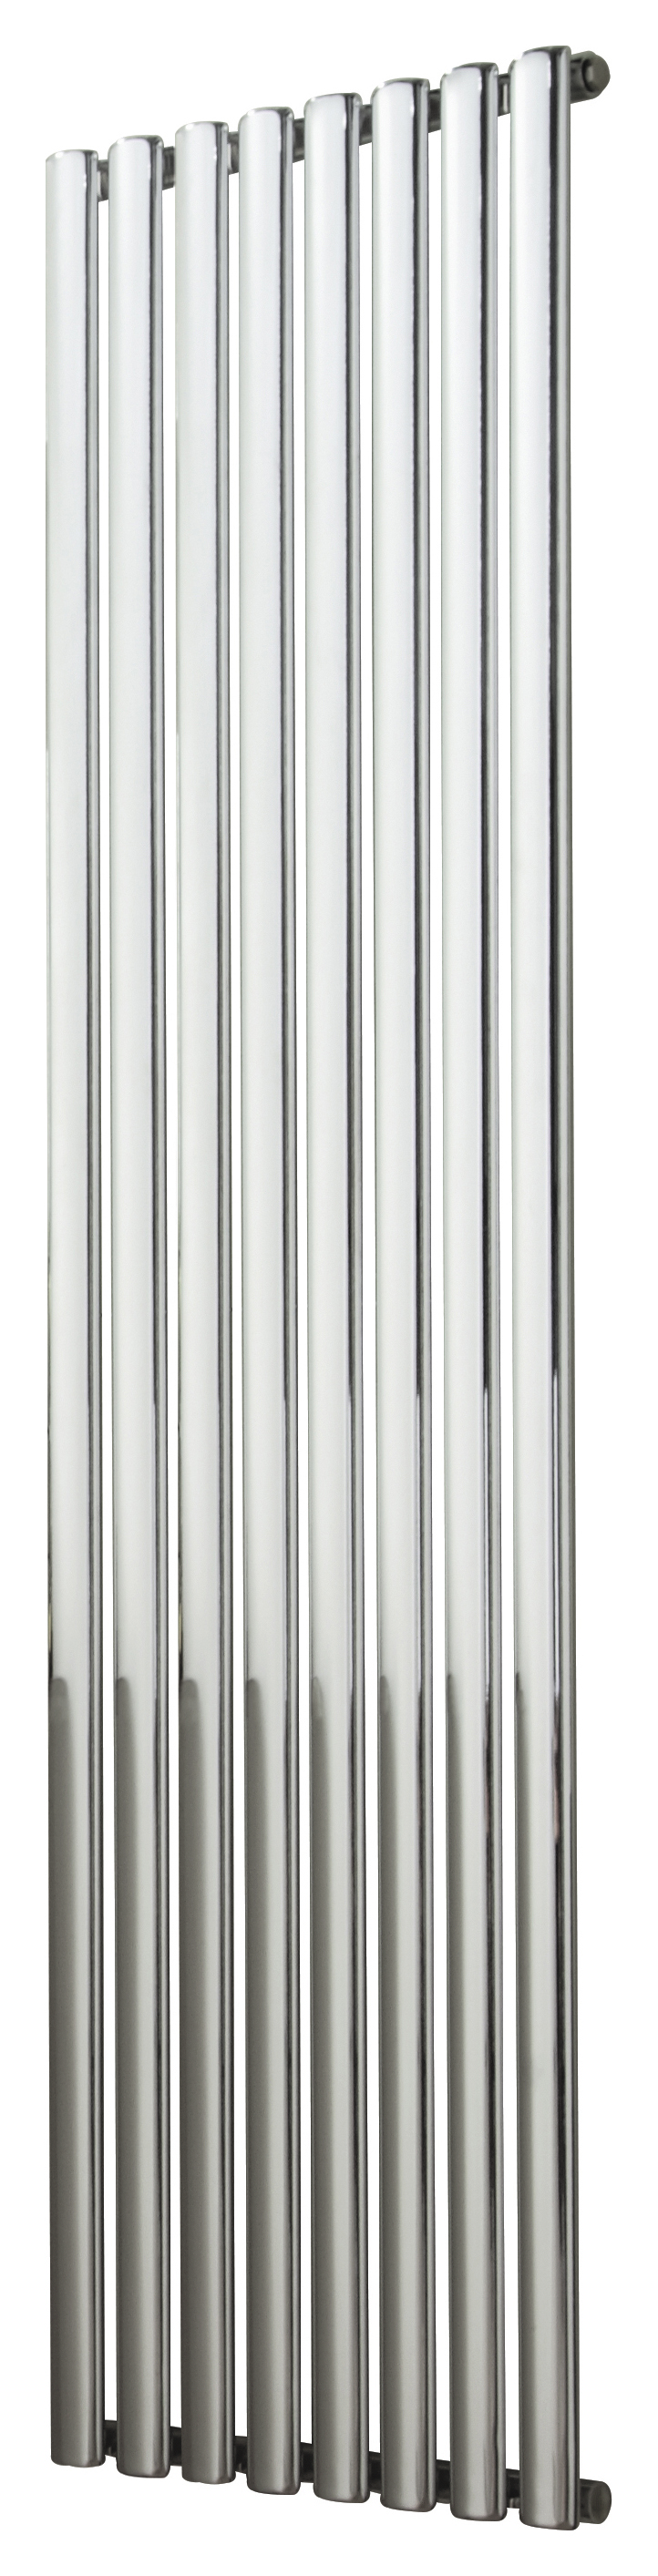 Image of Towelrads Chrome Dorney Vertical Designer Radiator - 1800 x 352mm